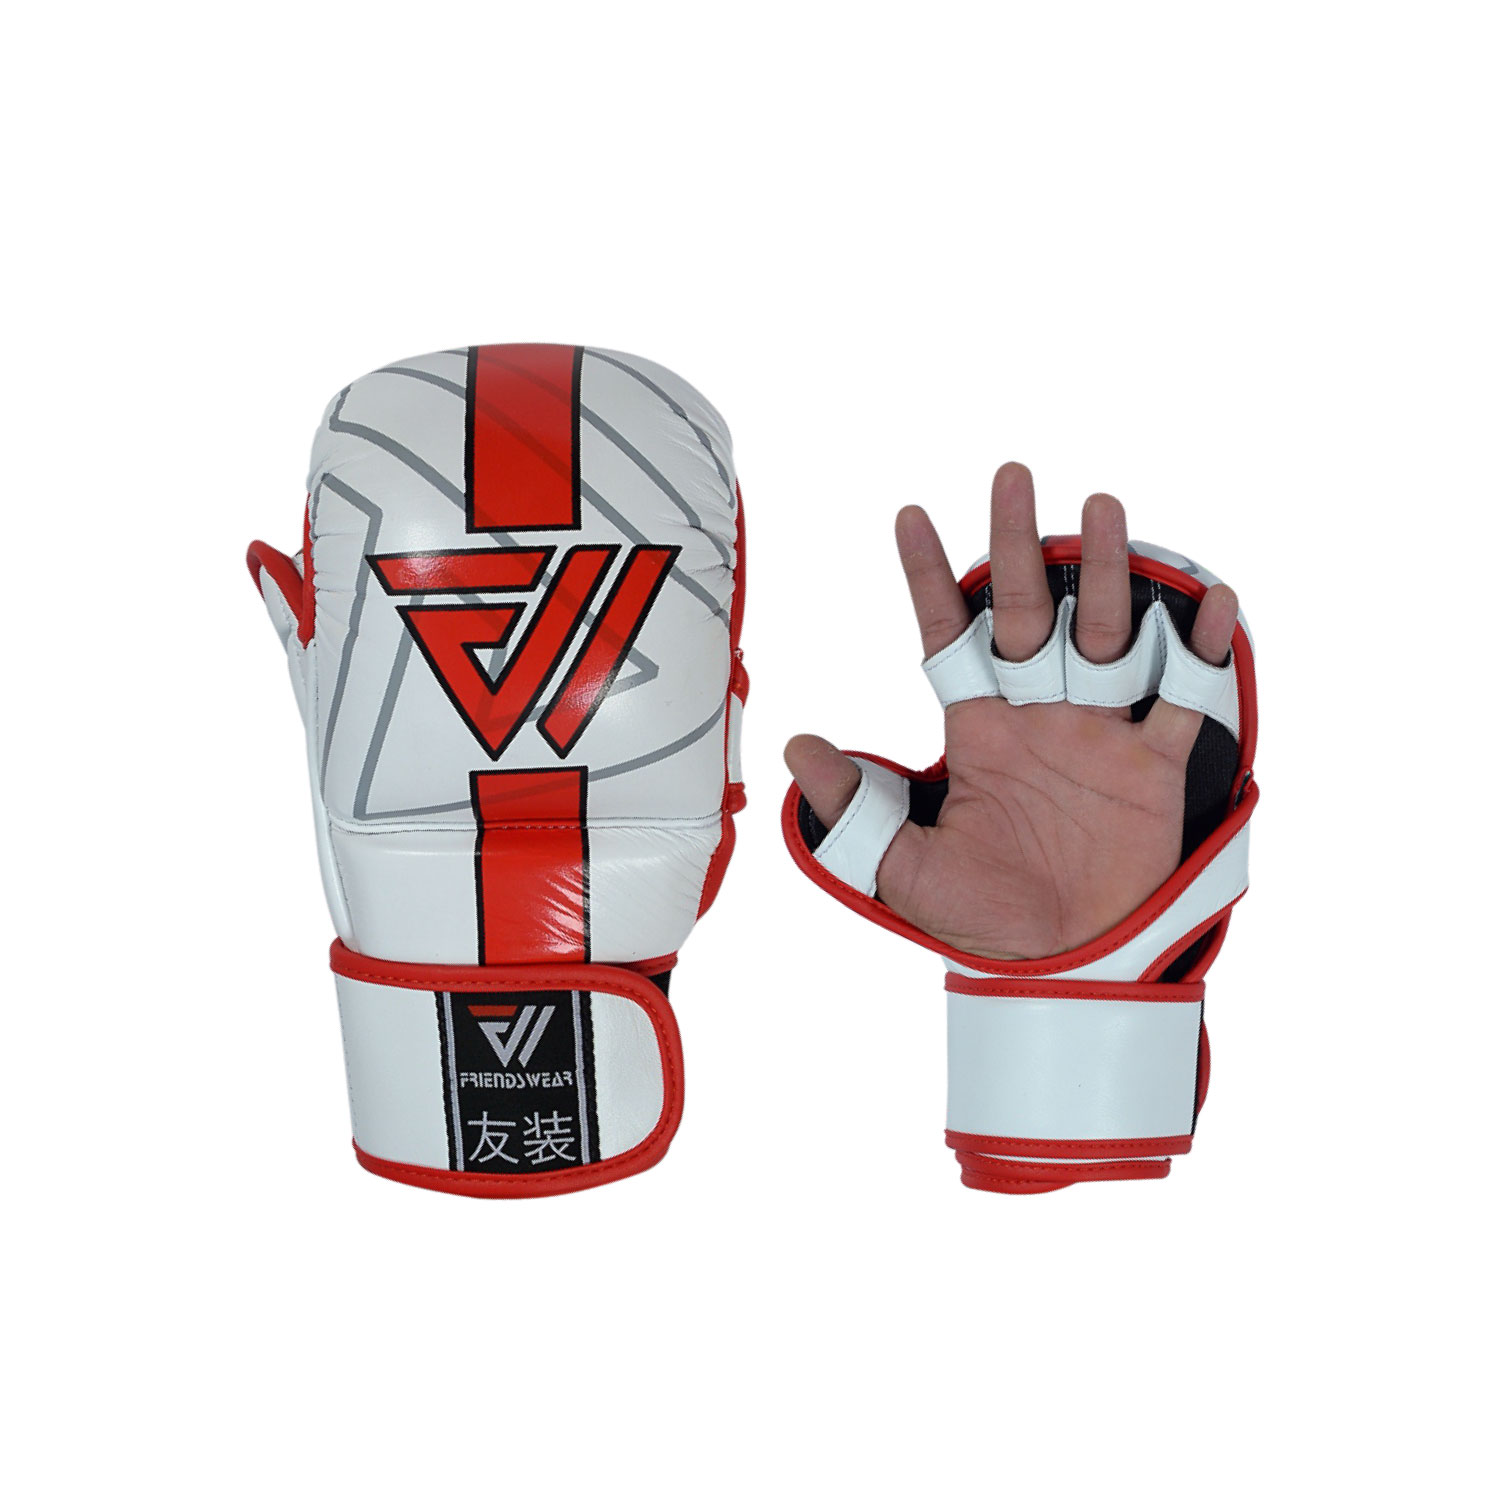 MMA Gloves